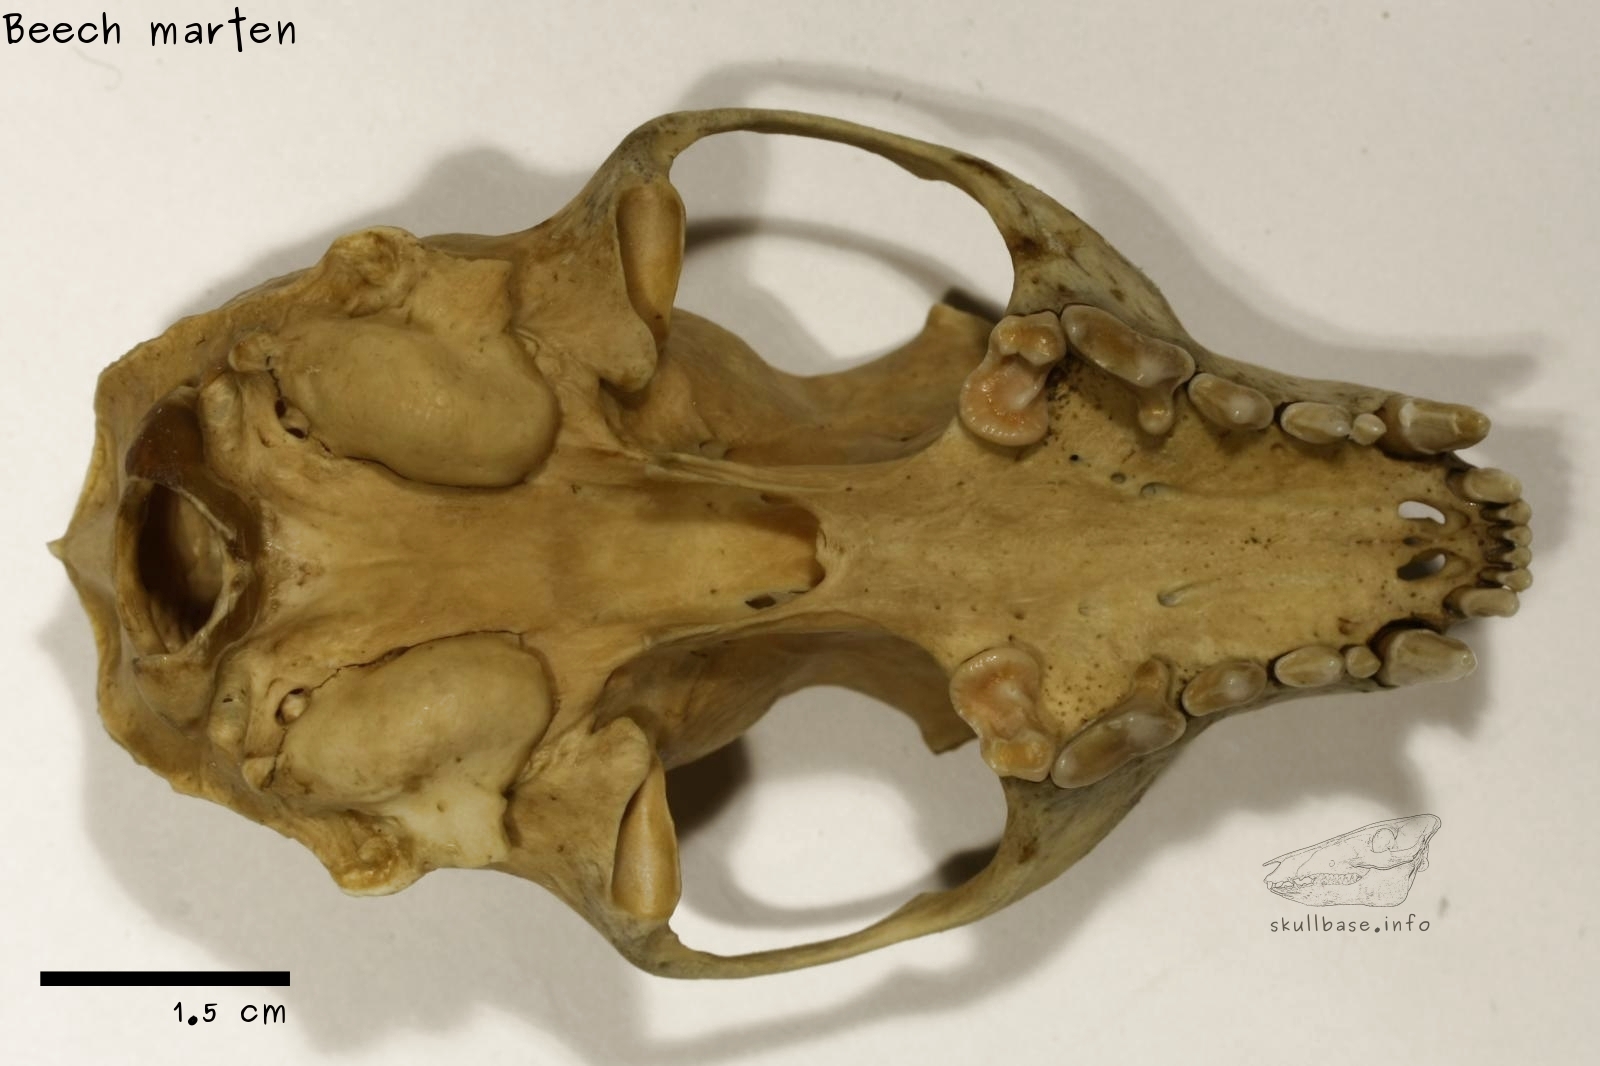 Beech marten (Martes foina) skull ventral view